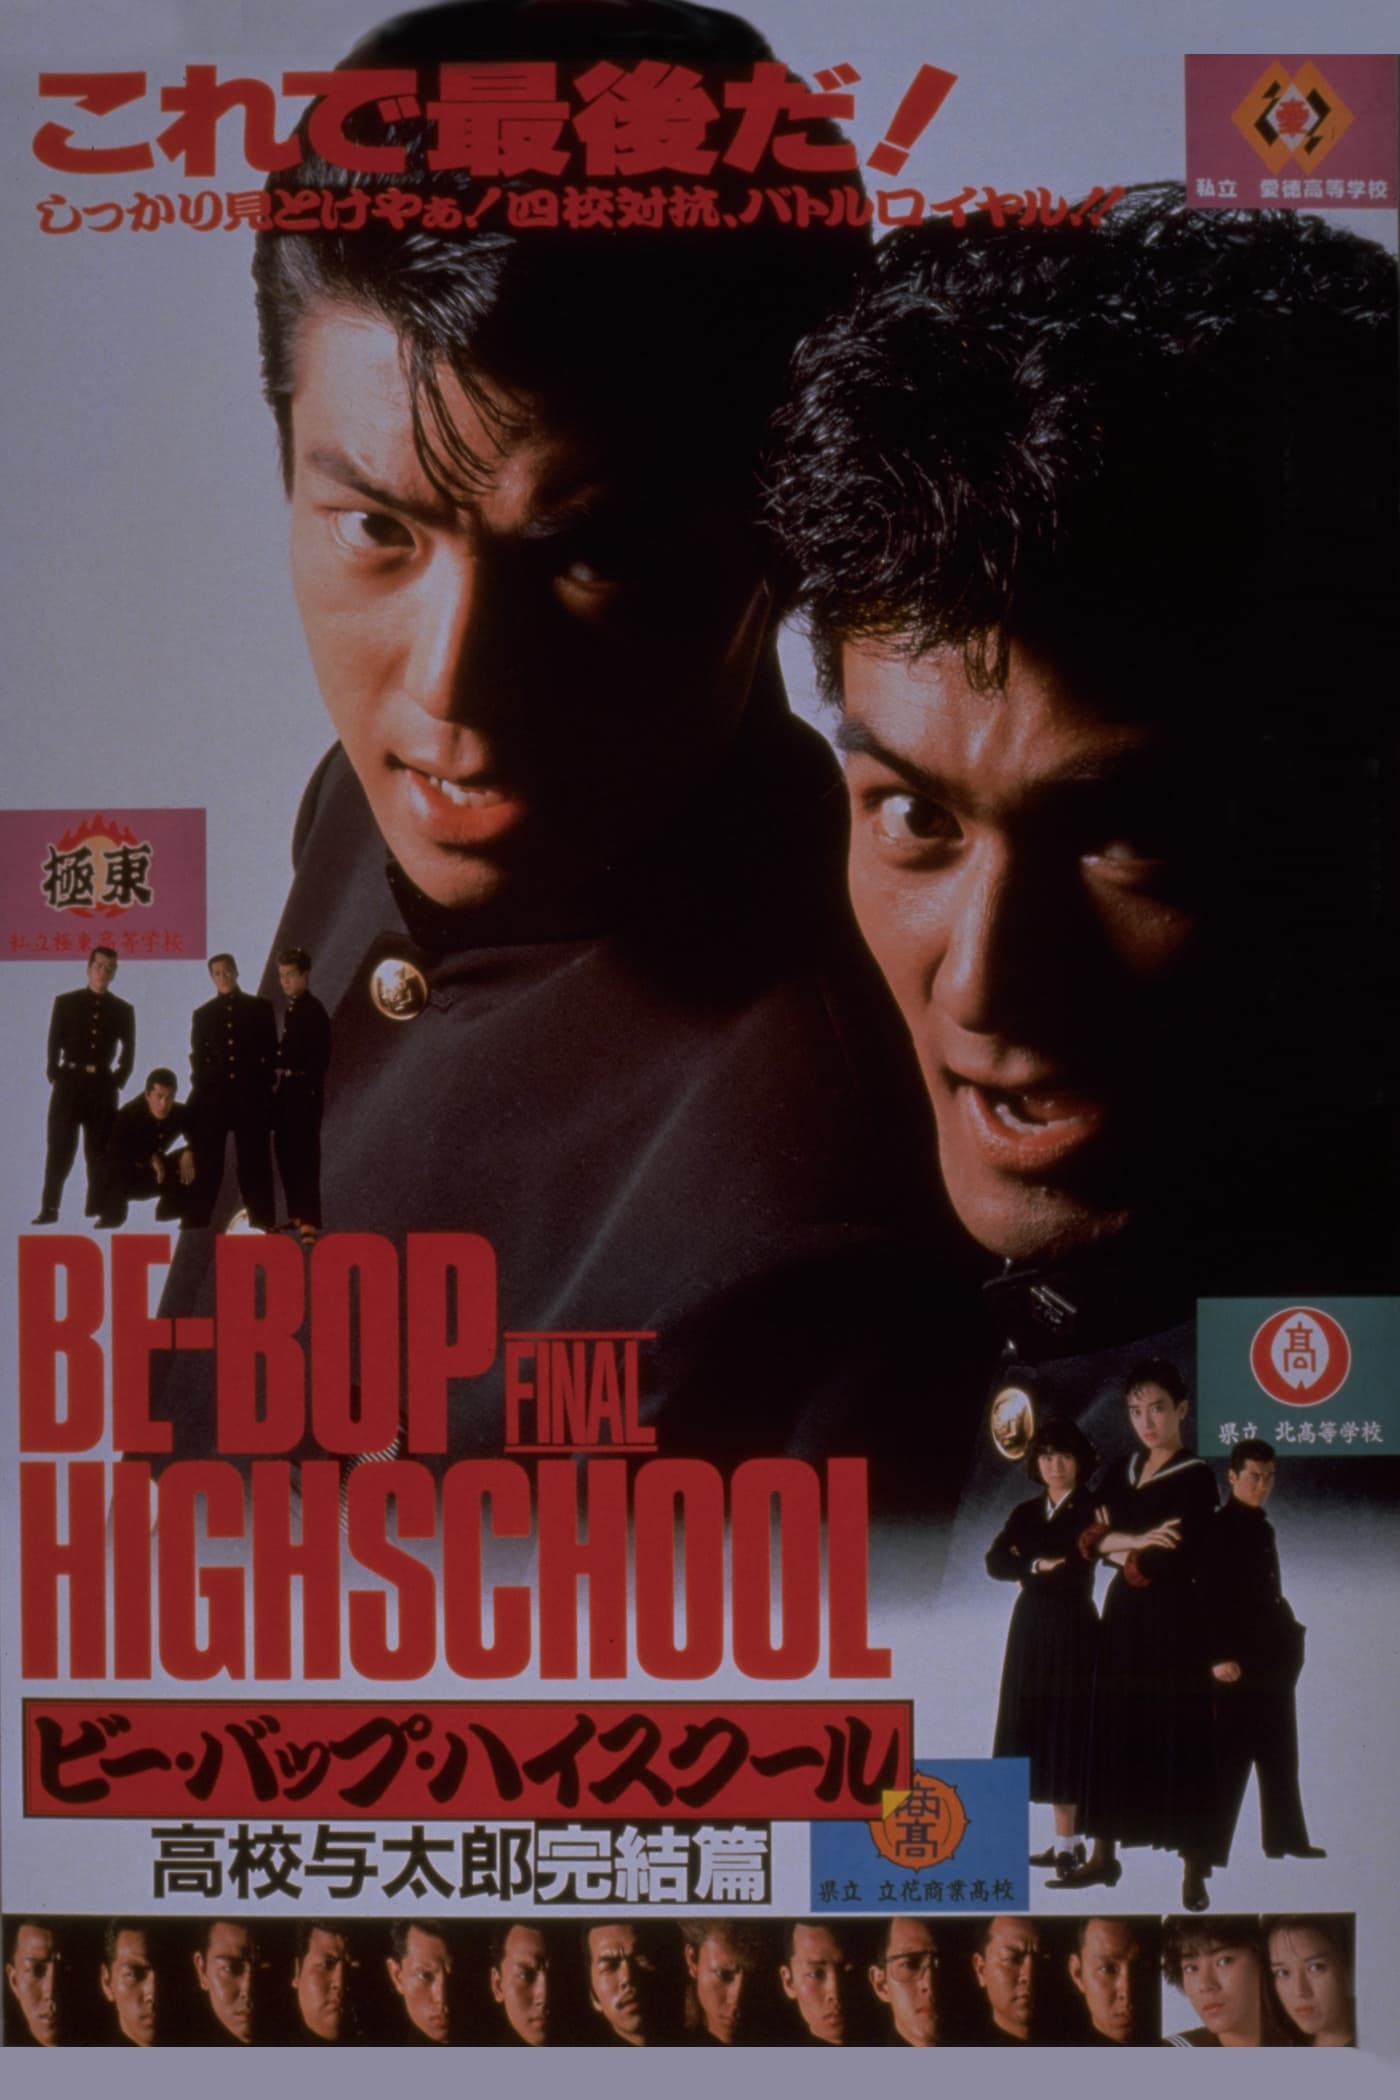 Be-Bop Highschool: The Power (1988)